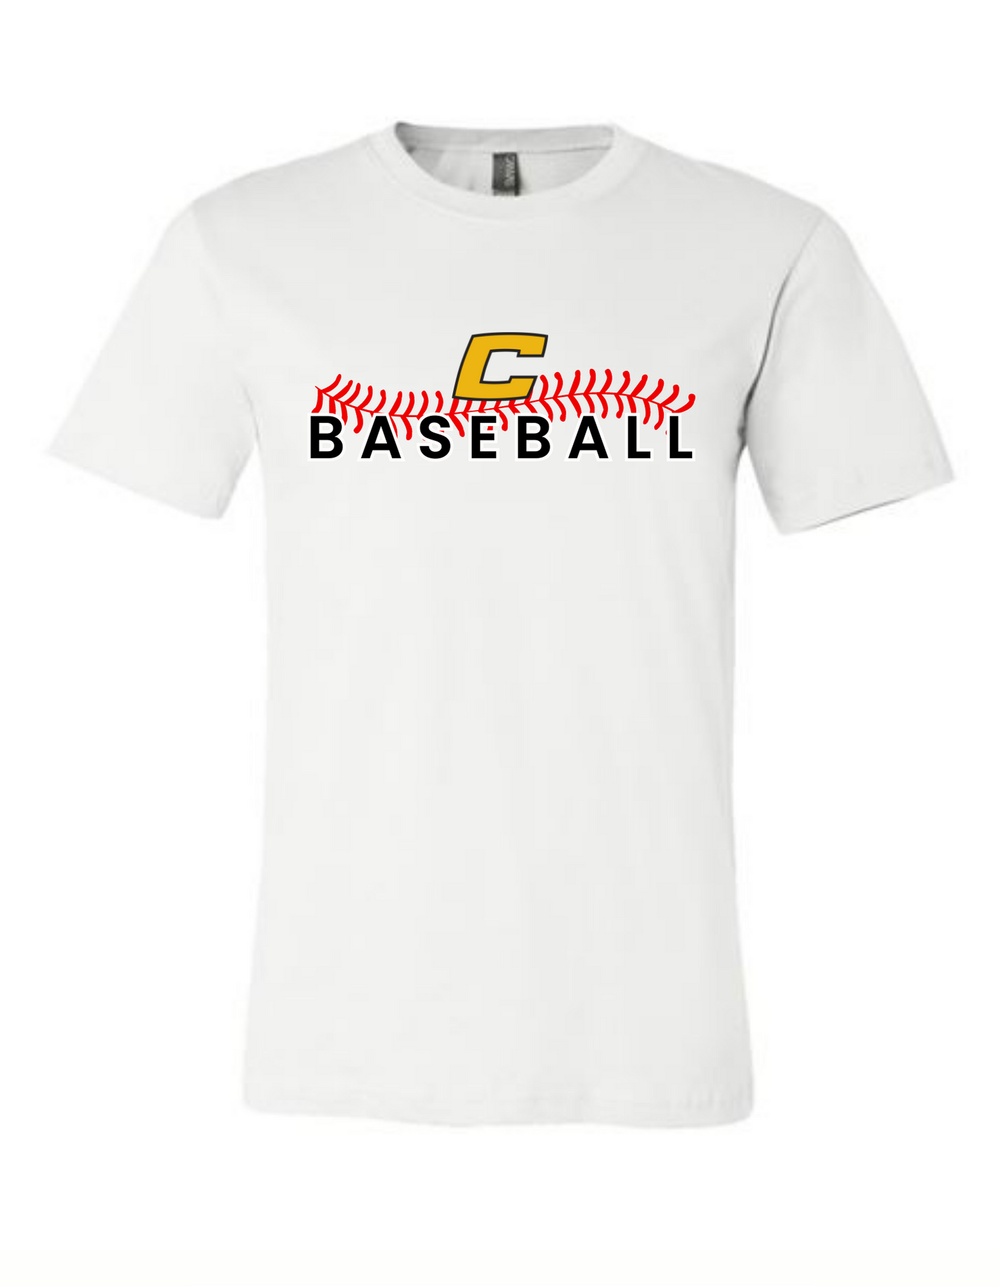 baseball shirt designs